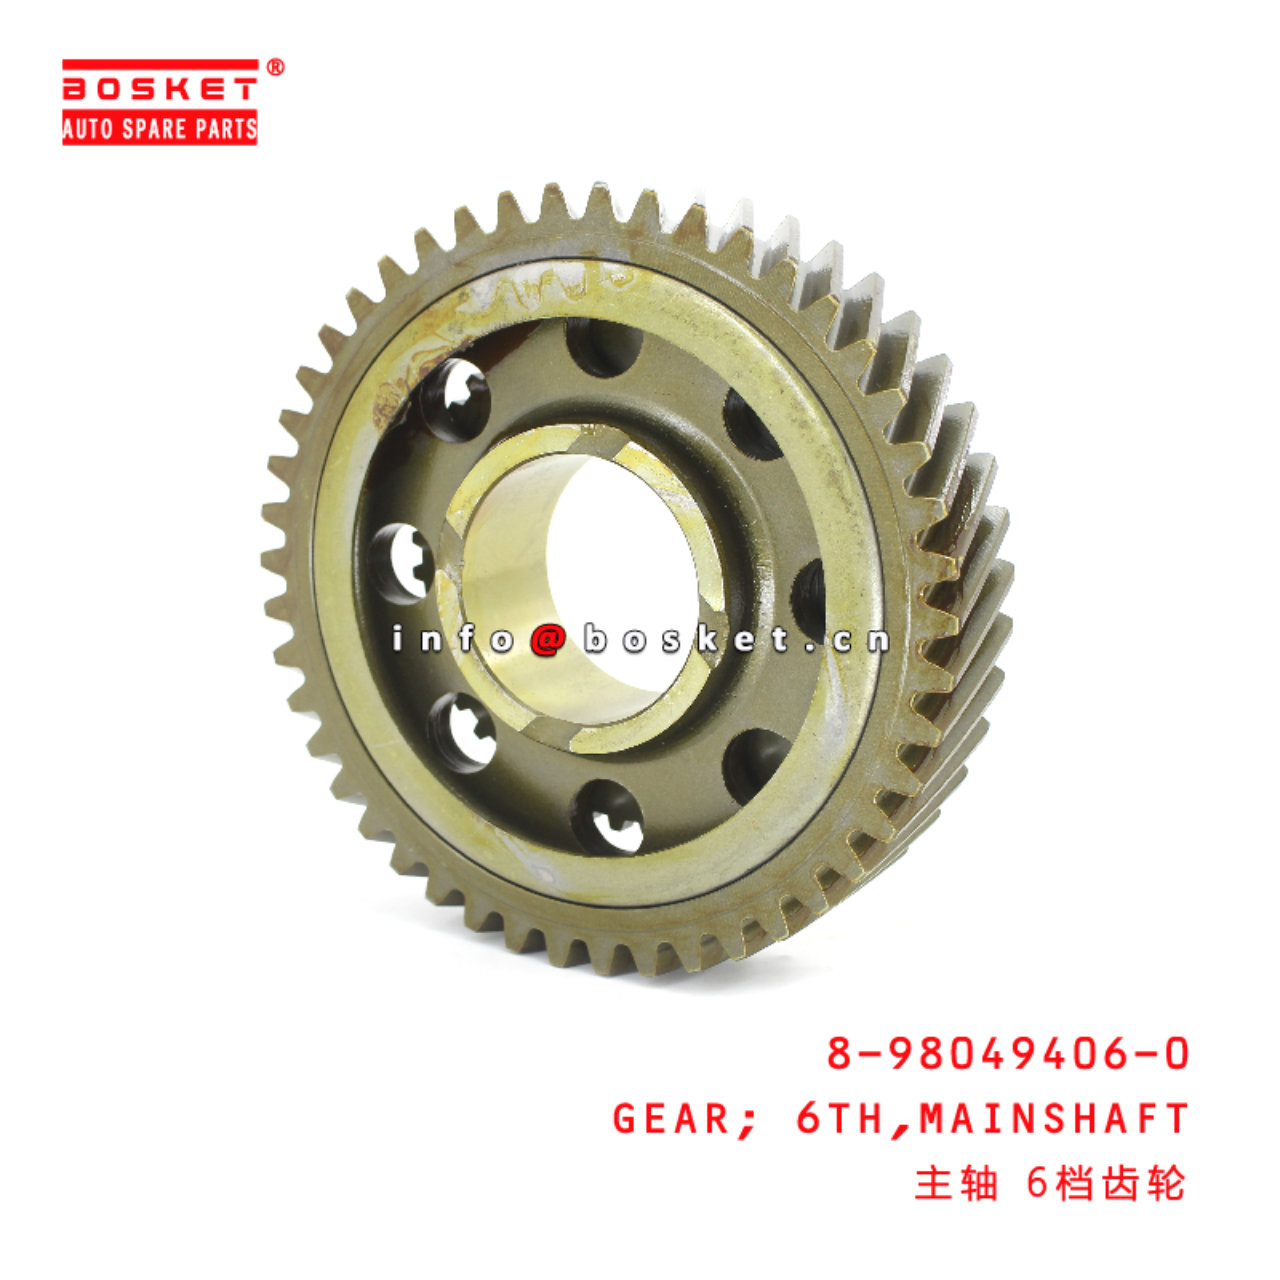 8-98049406-0 Mainshaft Sixth Gear suitable for ISUZU MZW6P 6HK1-T 8980494060